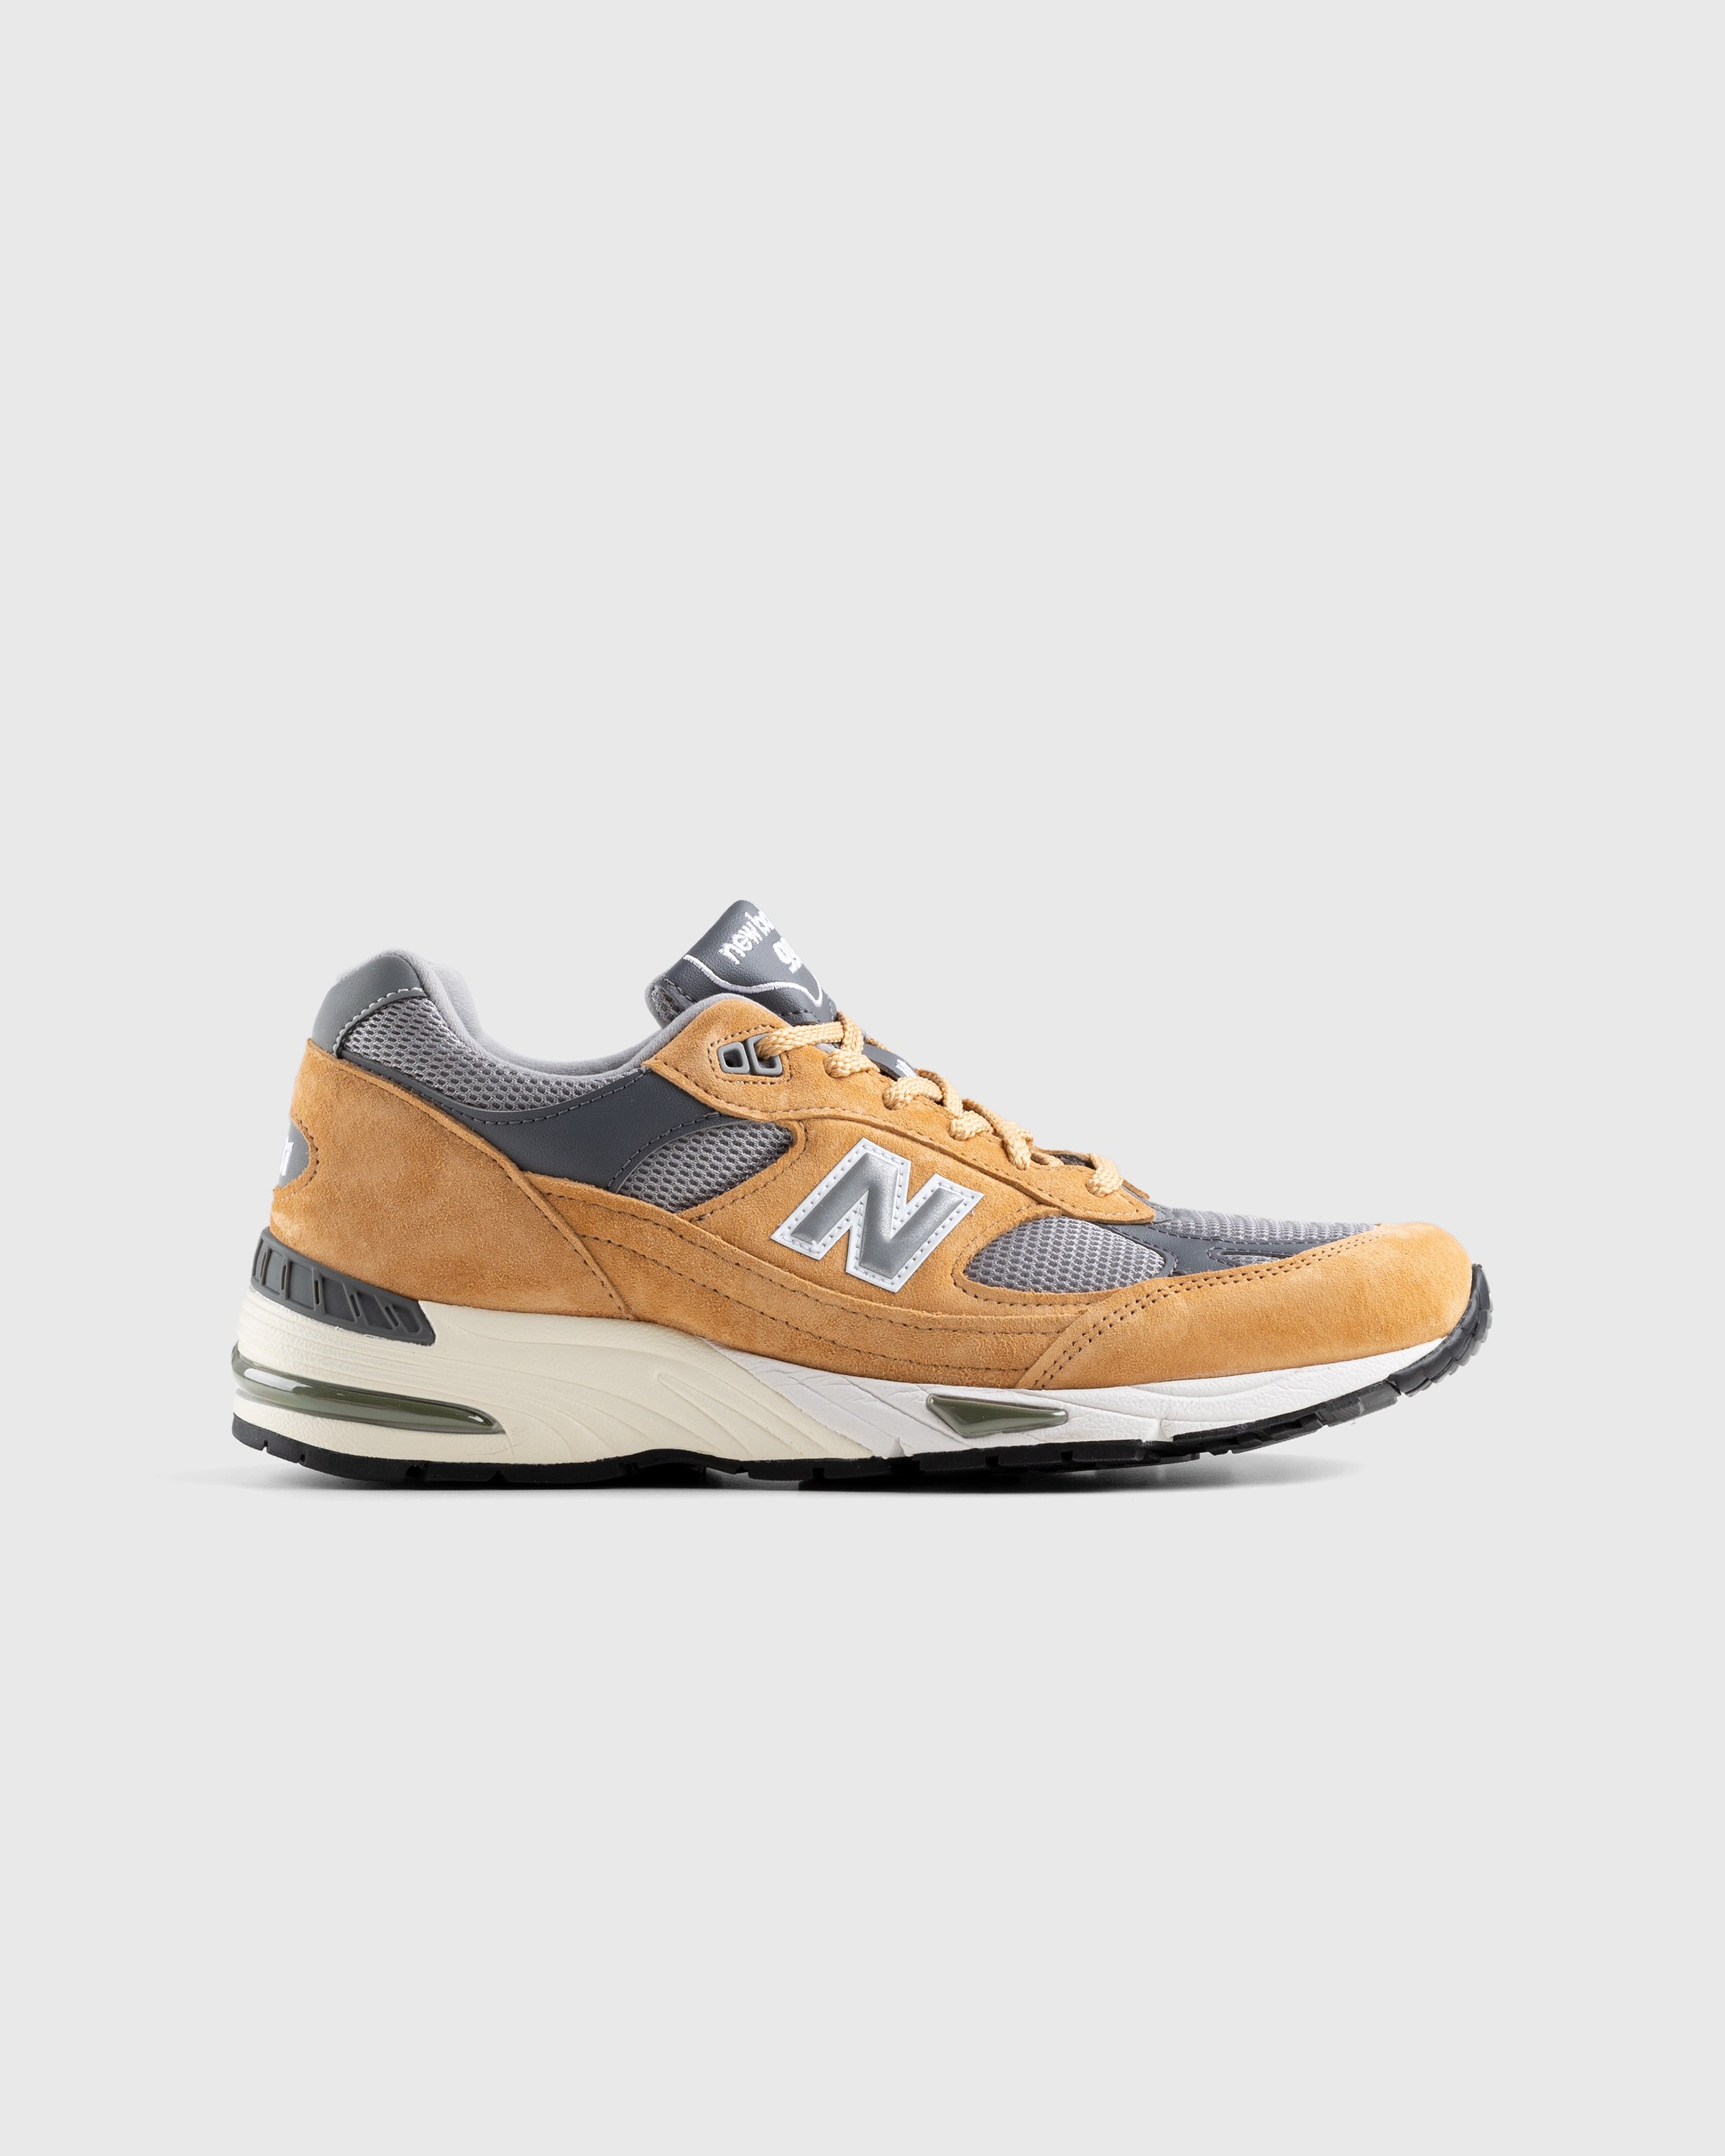 New Balance - M991TGG Tan/Grey - Footwear - Brown - Image 1